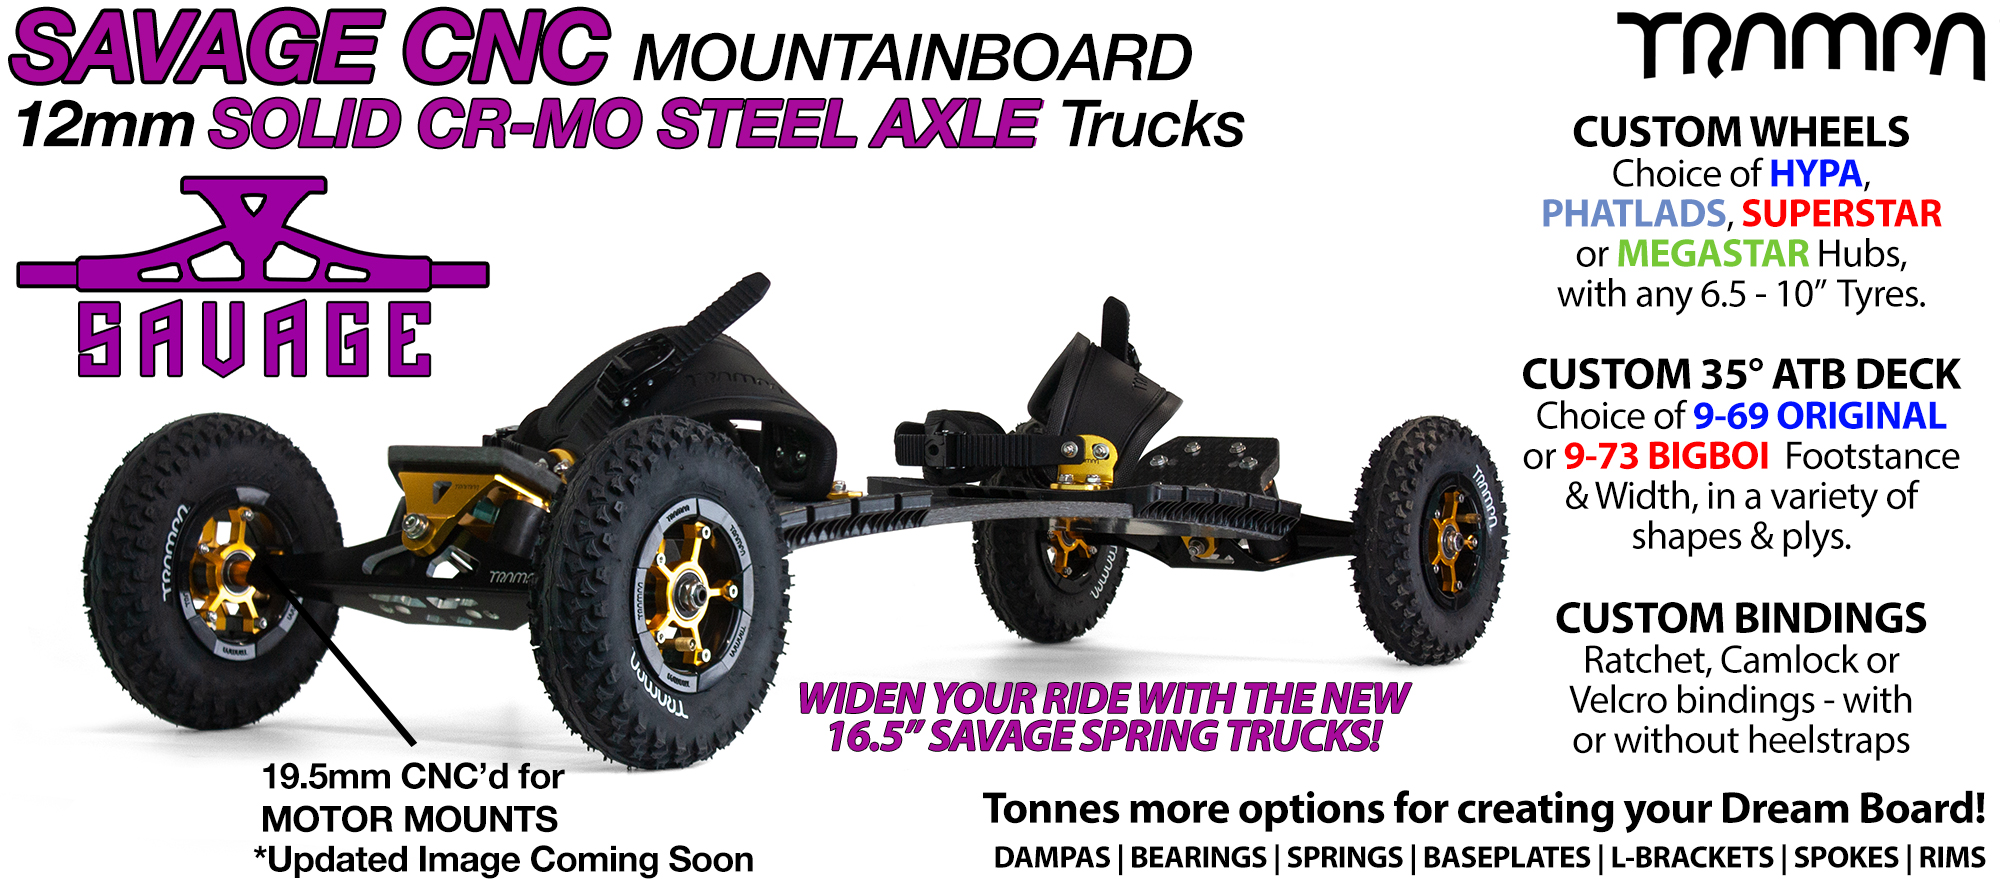 TRAMPA Mountainboard with 12mm SOLID CR-MO Axles SAVAGE Trucks RATCHET Bindings & Custom Wheels